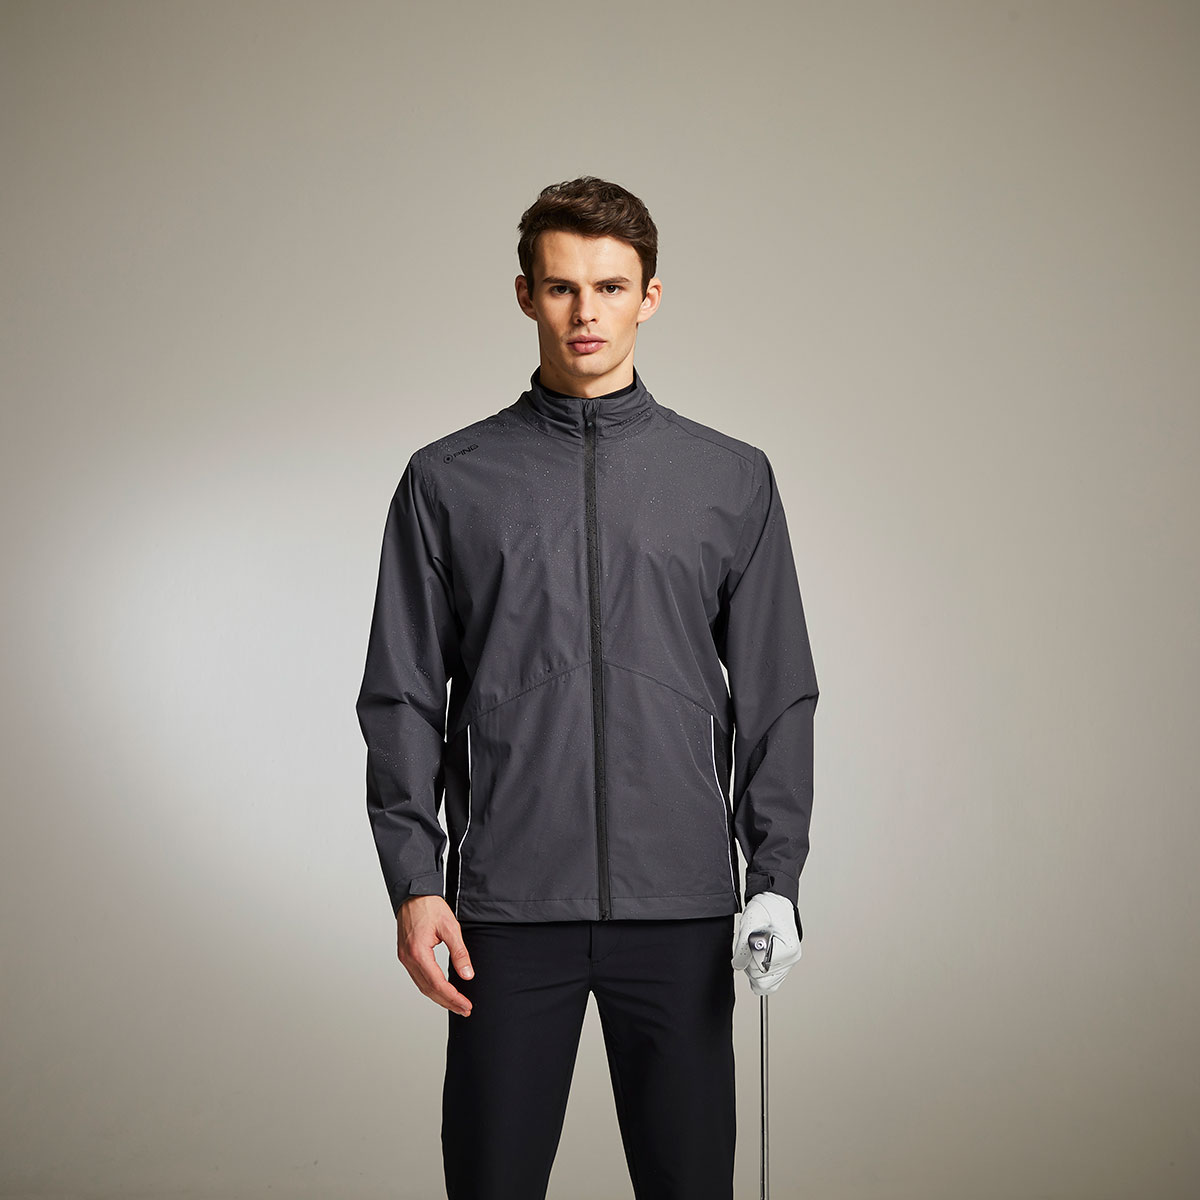 PING Men's SensorDry Waterproof Golf Jacket from american golf